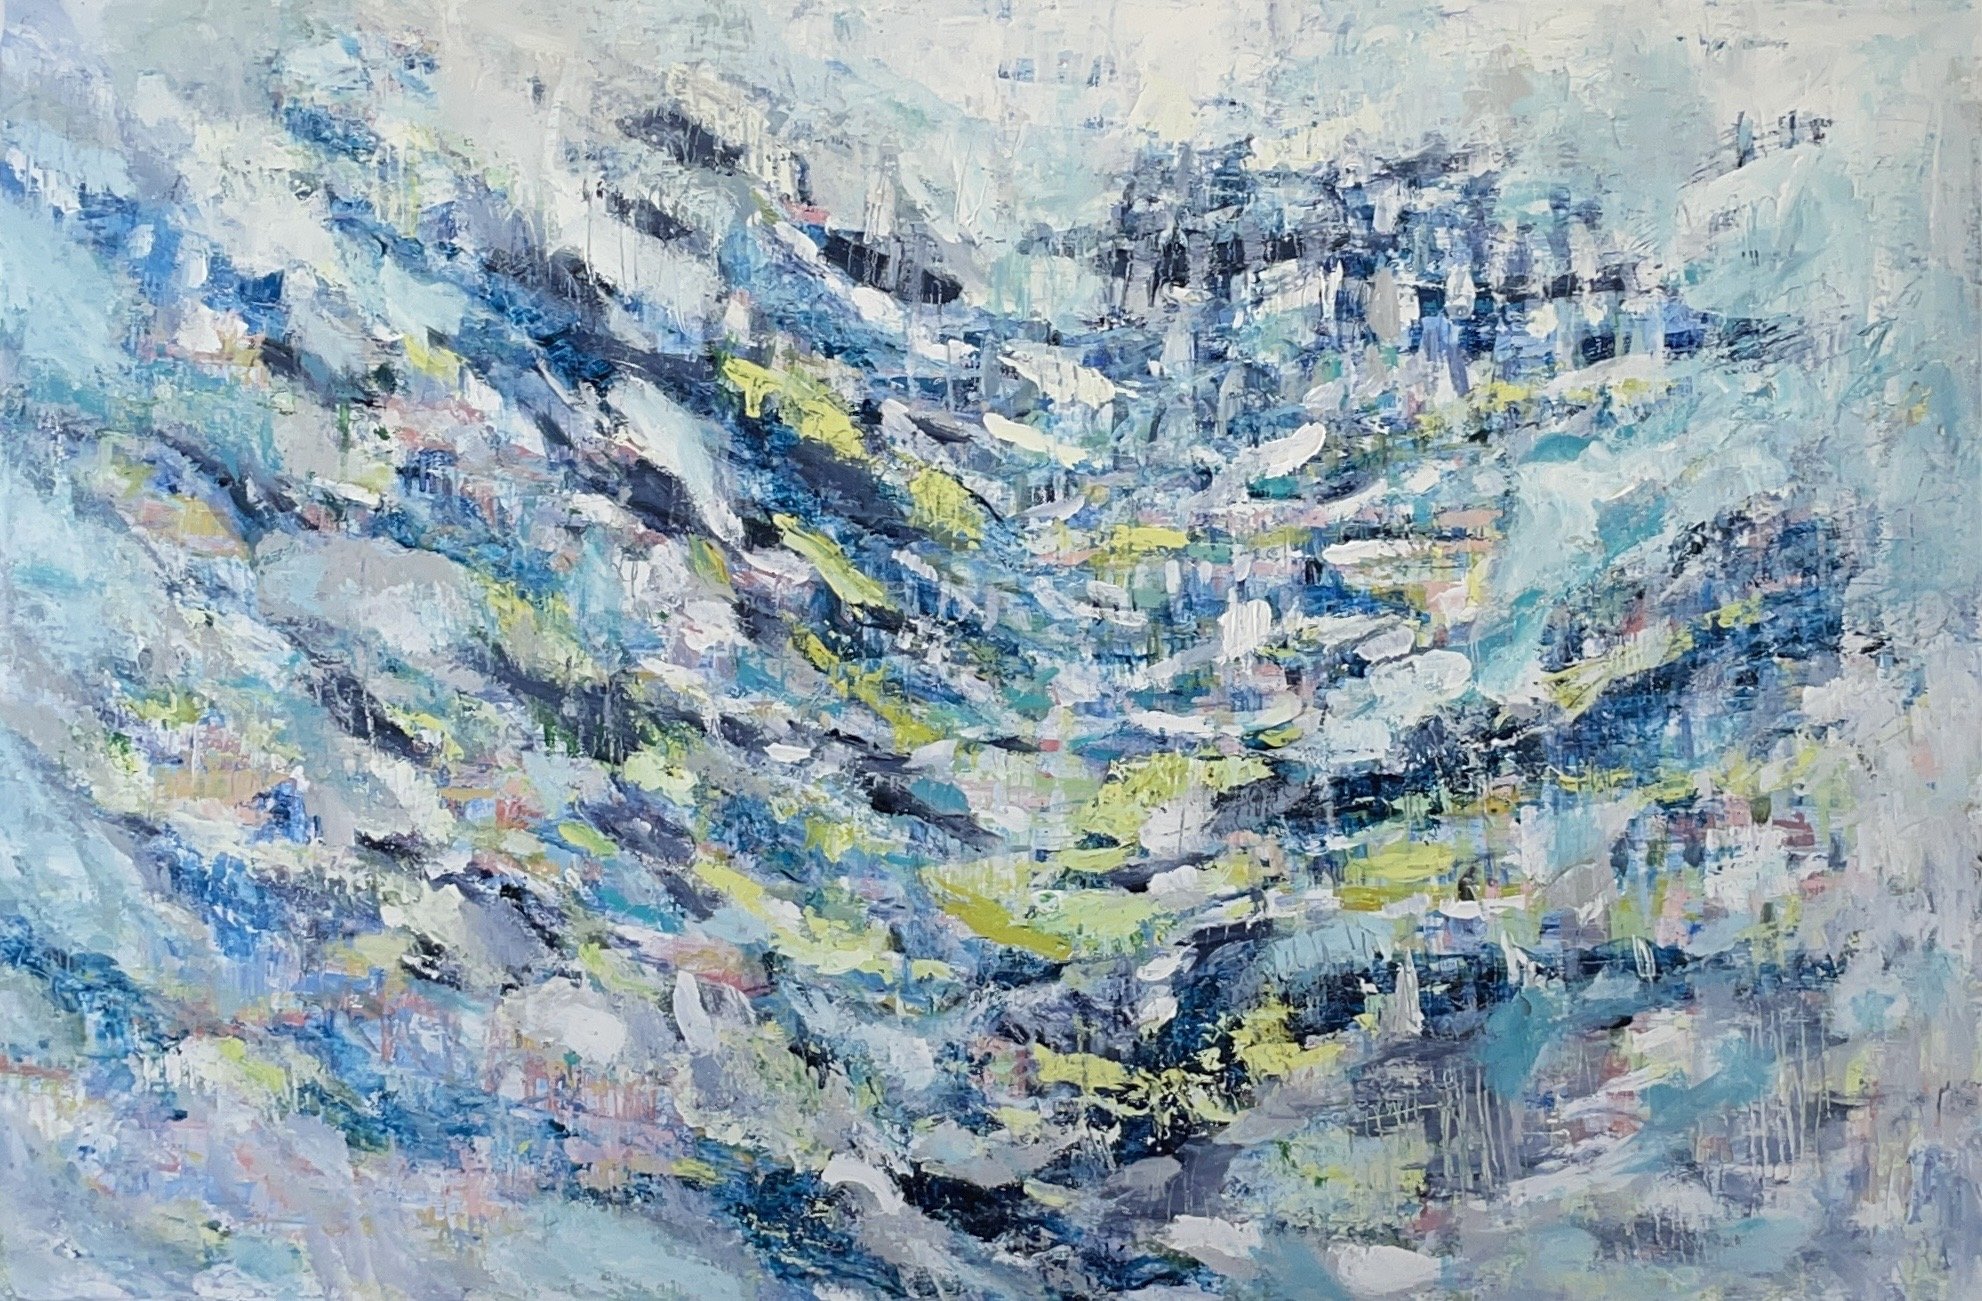   Blue Swirl  2022 Acrylic on canvas, 24x36 inches 